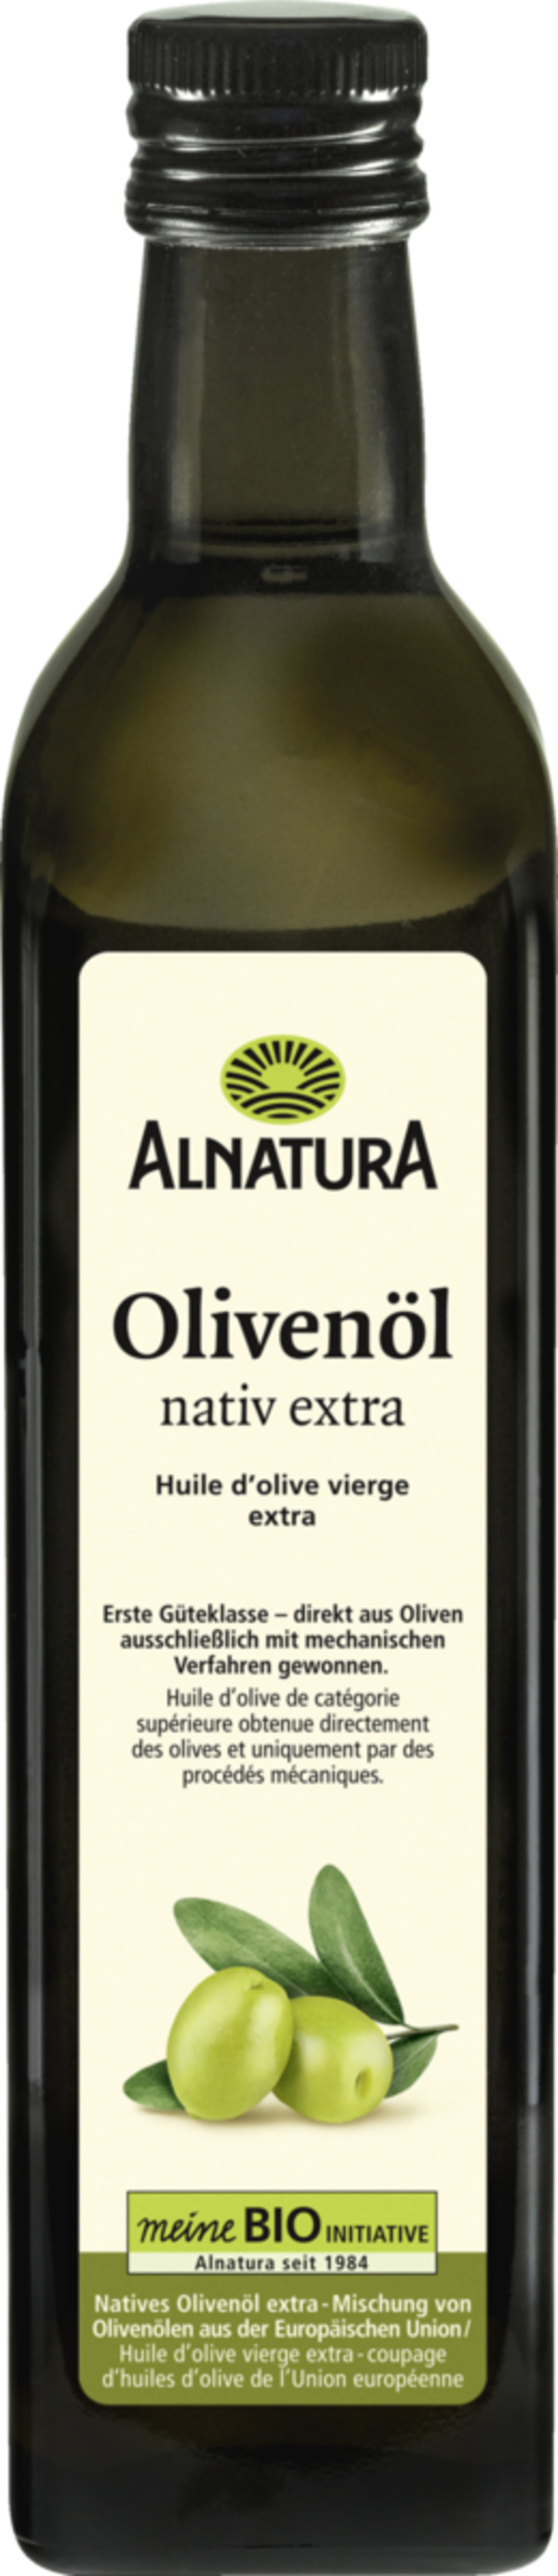 Bild 1 von Alnatura Bio Olivenöl nativ extra